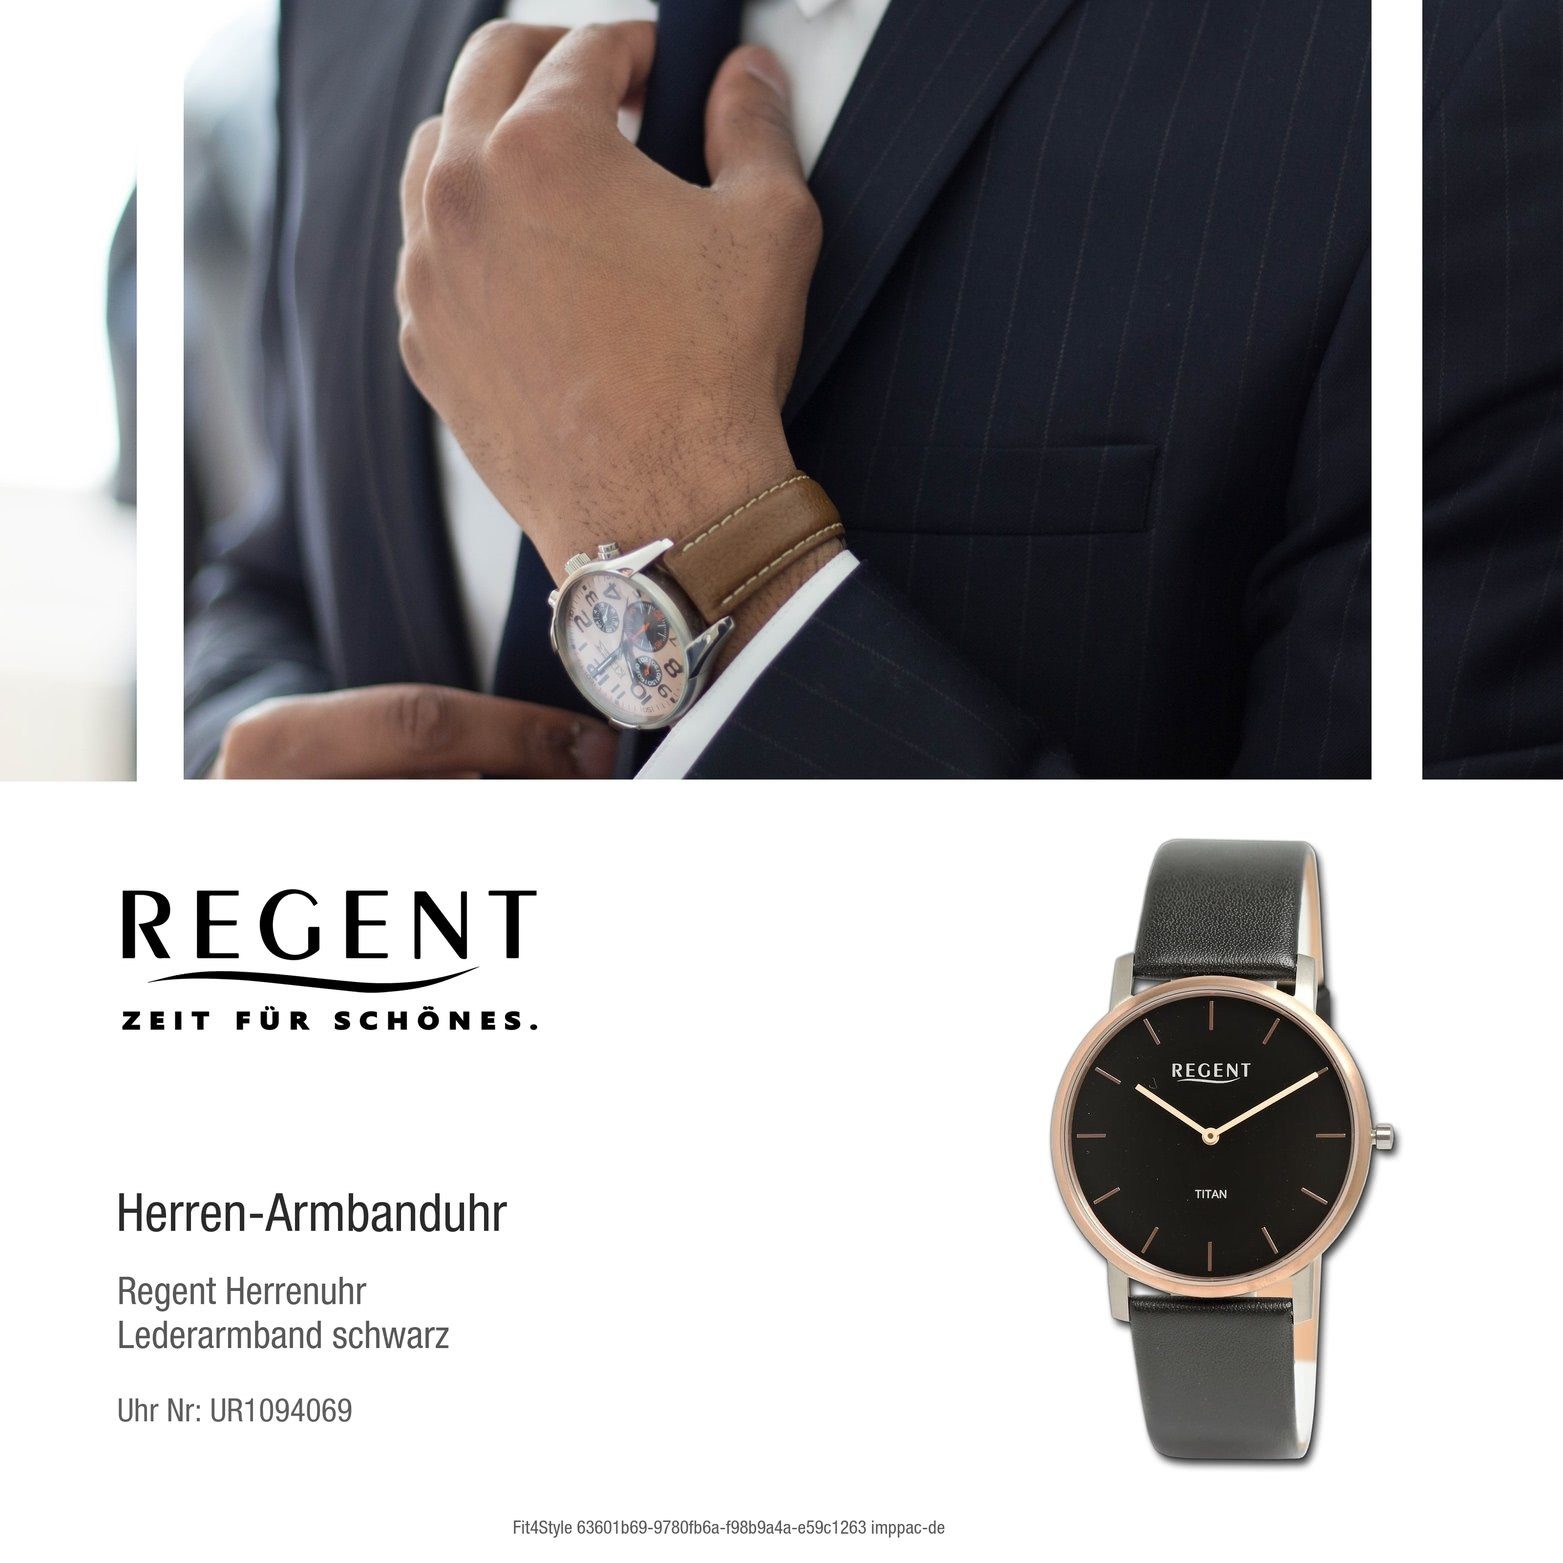 Regent Quarzuhr Herrenuhr (ca. schwarz, 39mm) Analog, Herren extra Lederarmband Armbanduhr Regent groß rundes Gehäuse